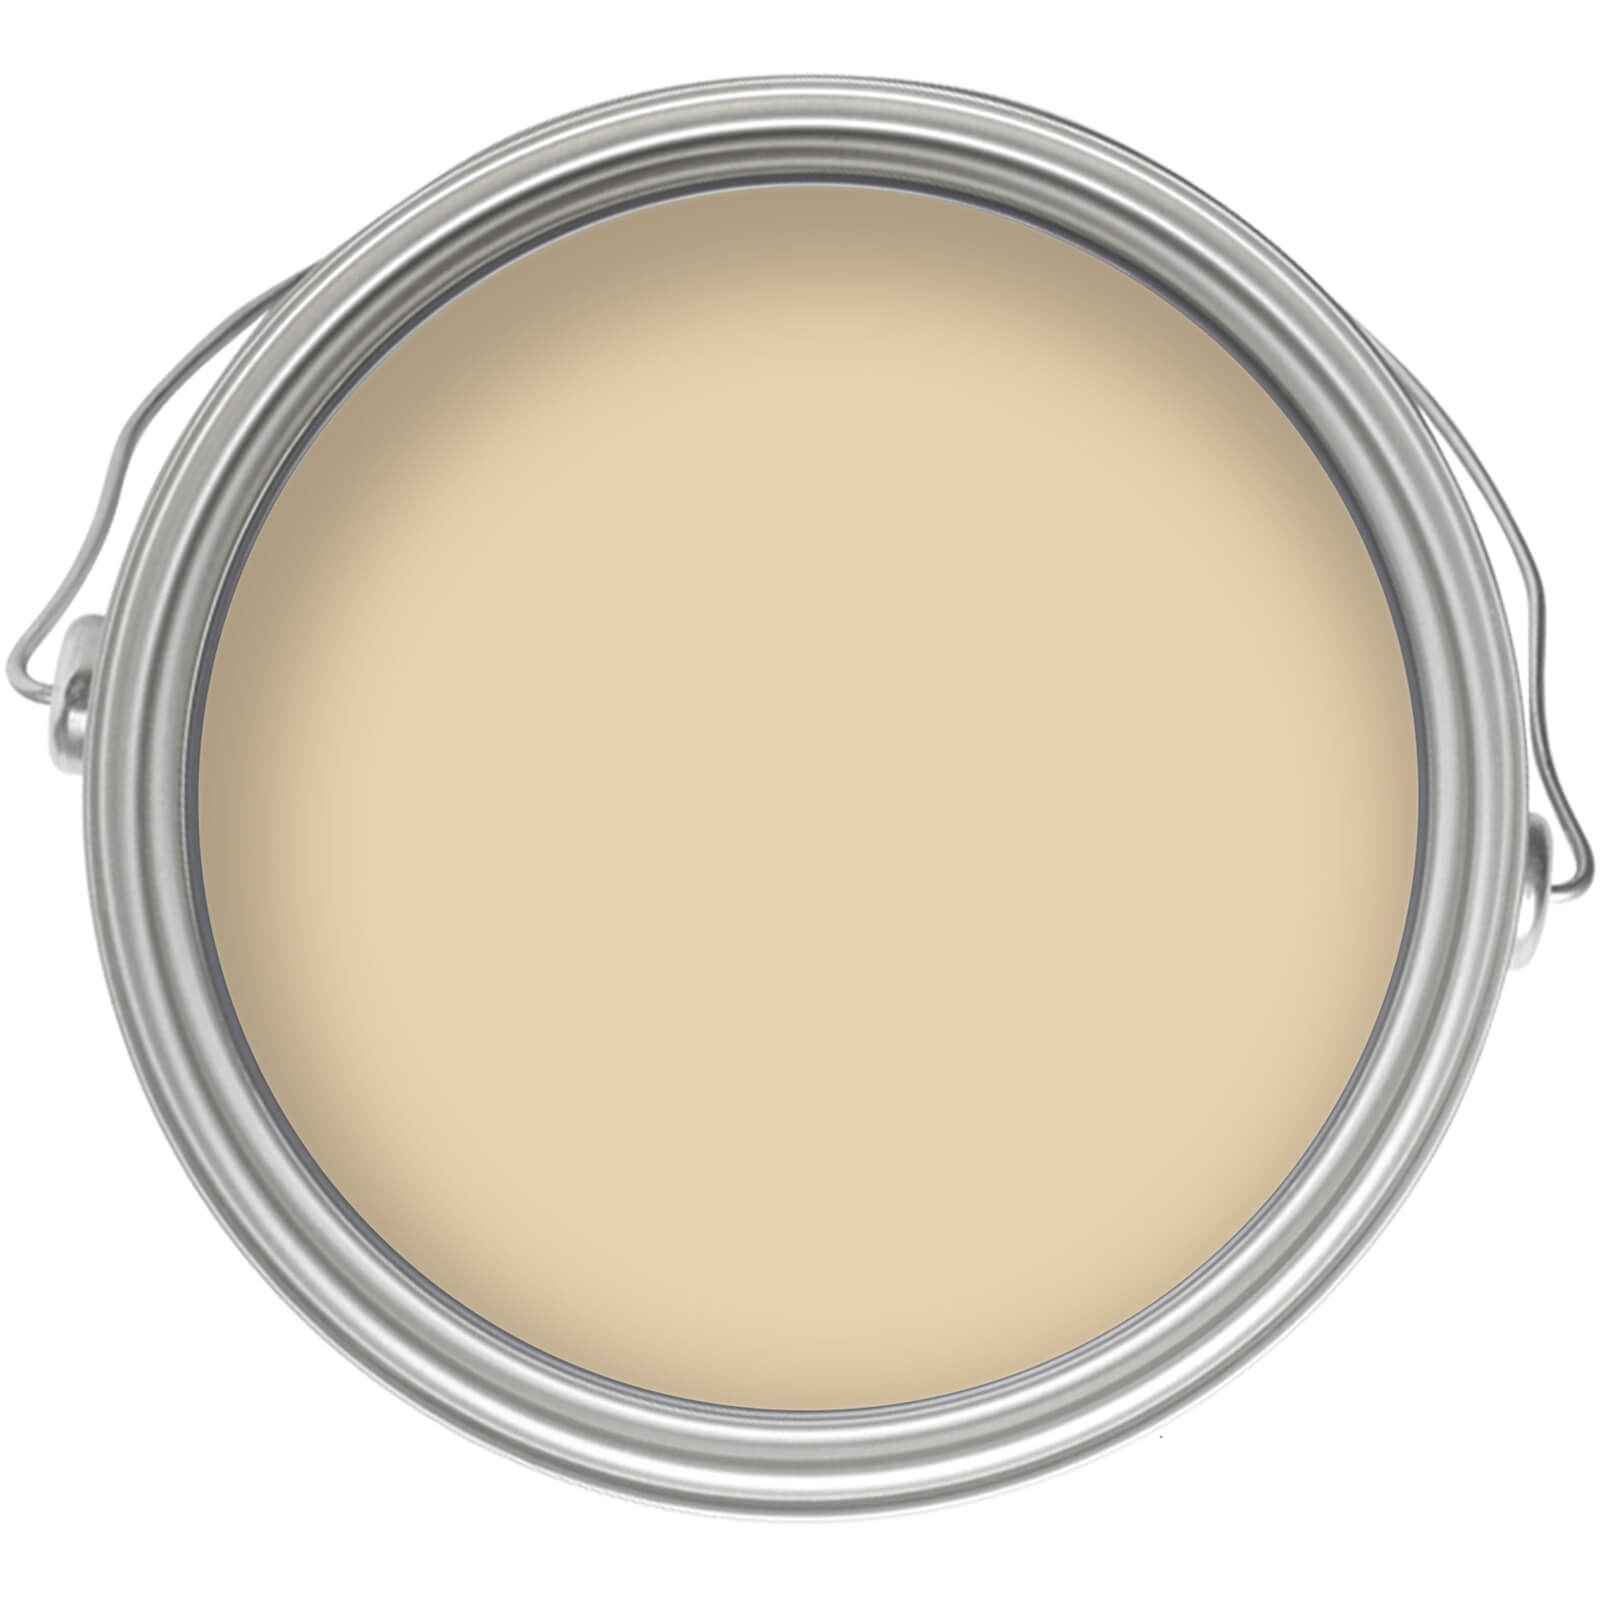 Homebase Smooth Masonry Paint - Regency Cream 5L